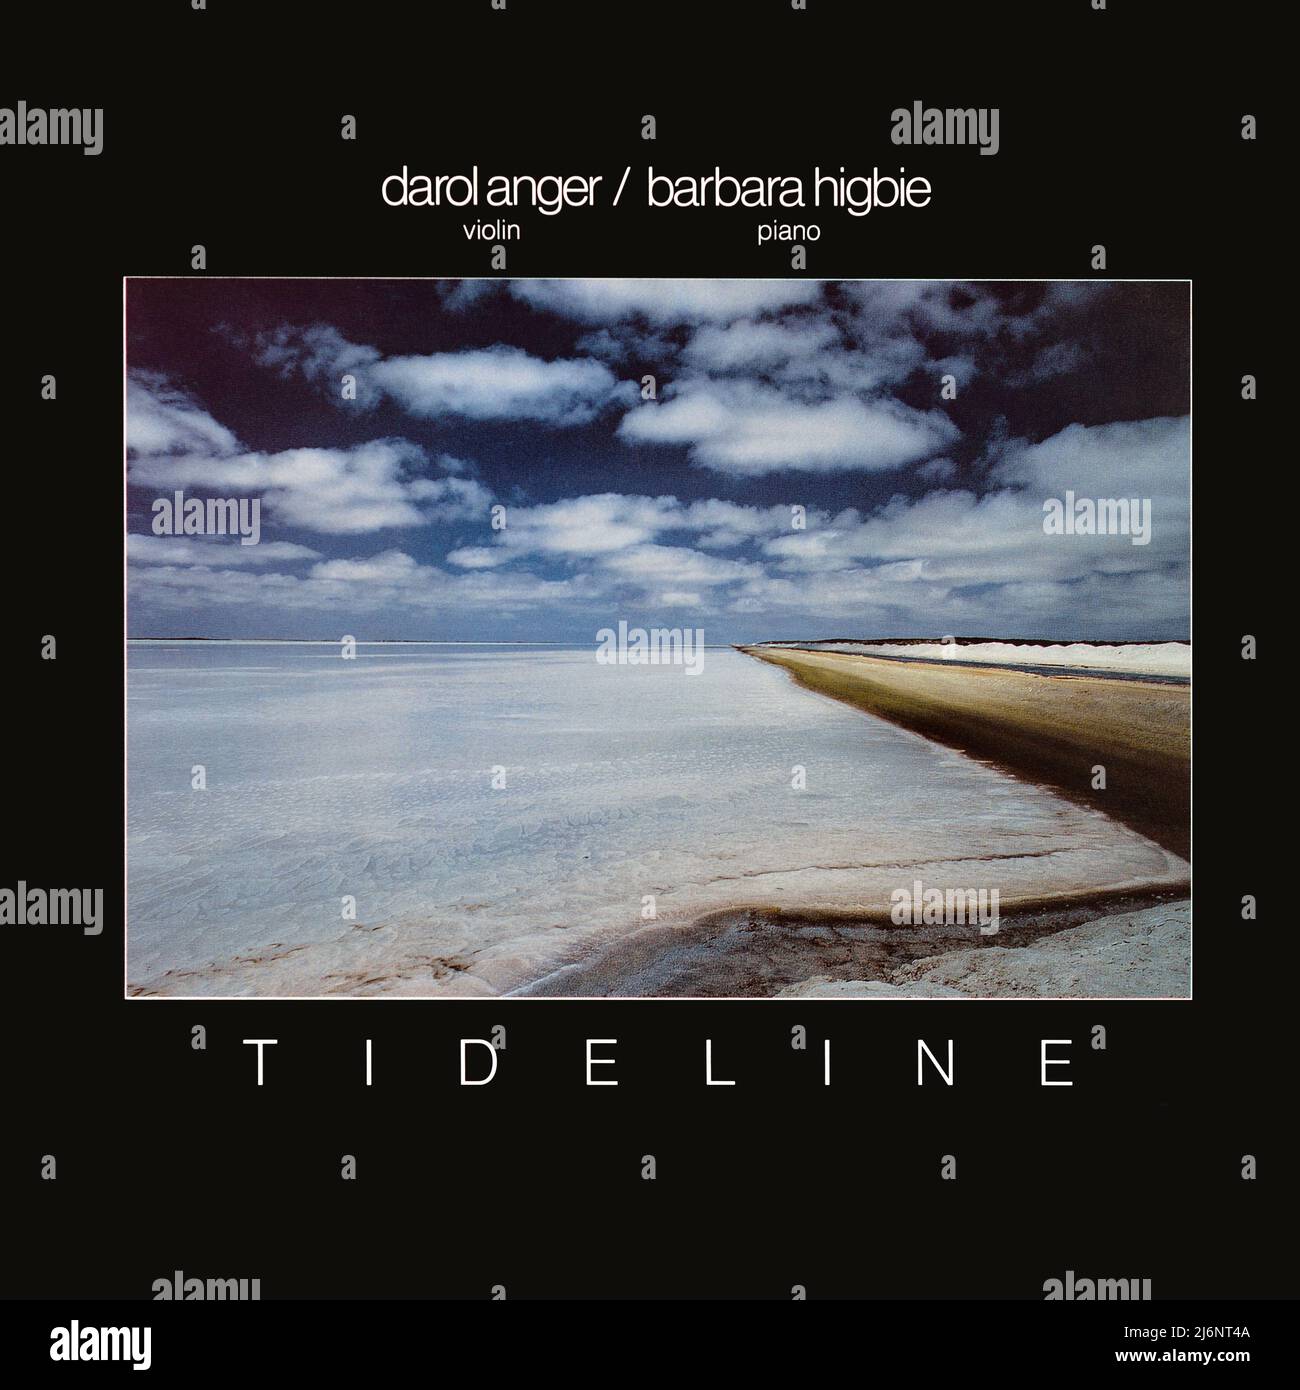 Darol Anger / Barbara Higbie - original Vinyl Album Cover - Tideline - 1982 Stockfoto